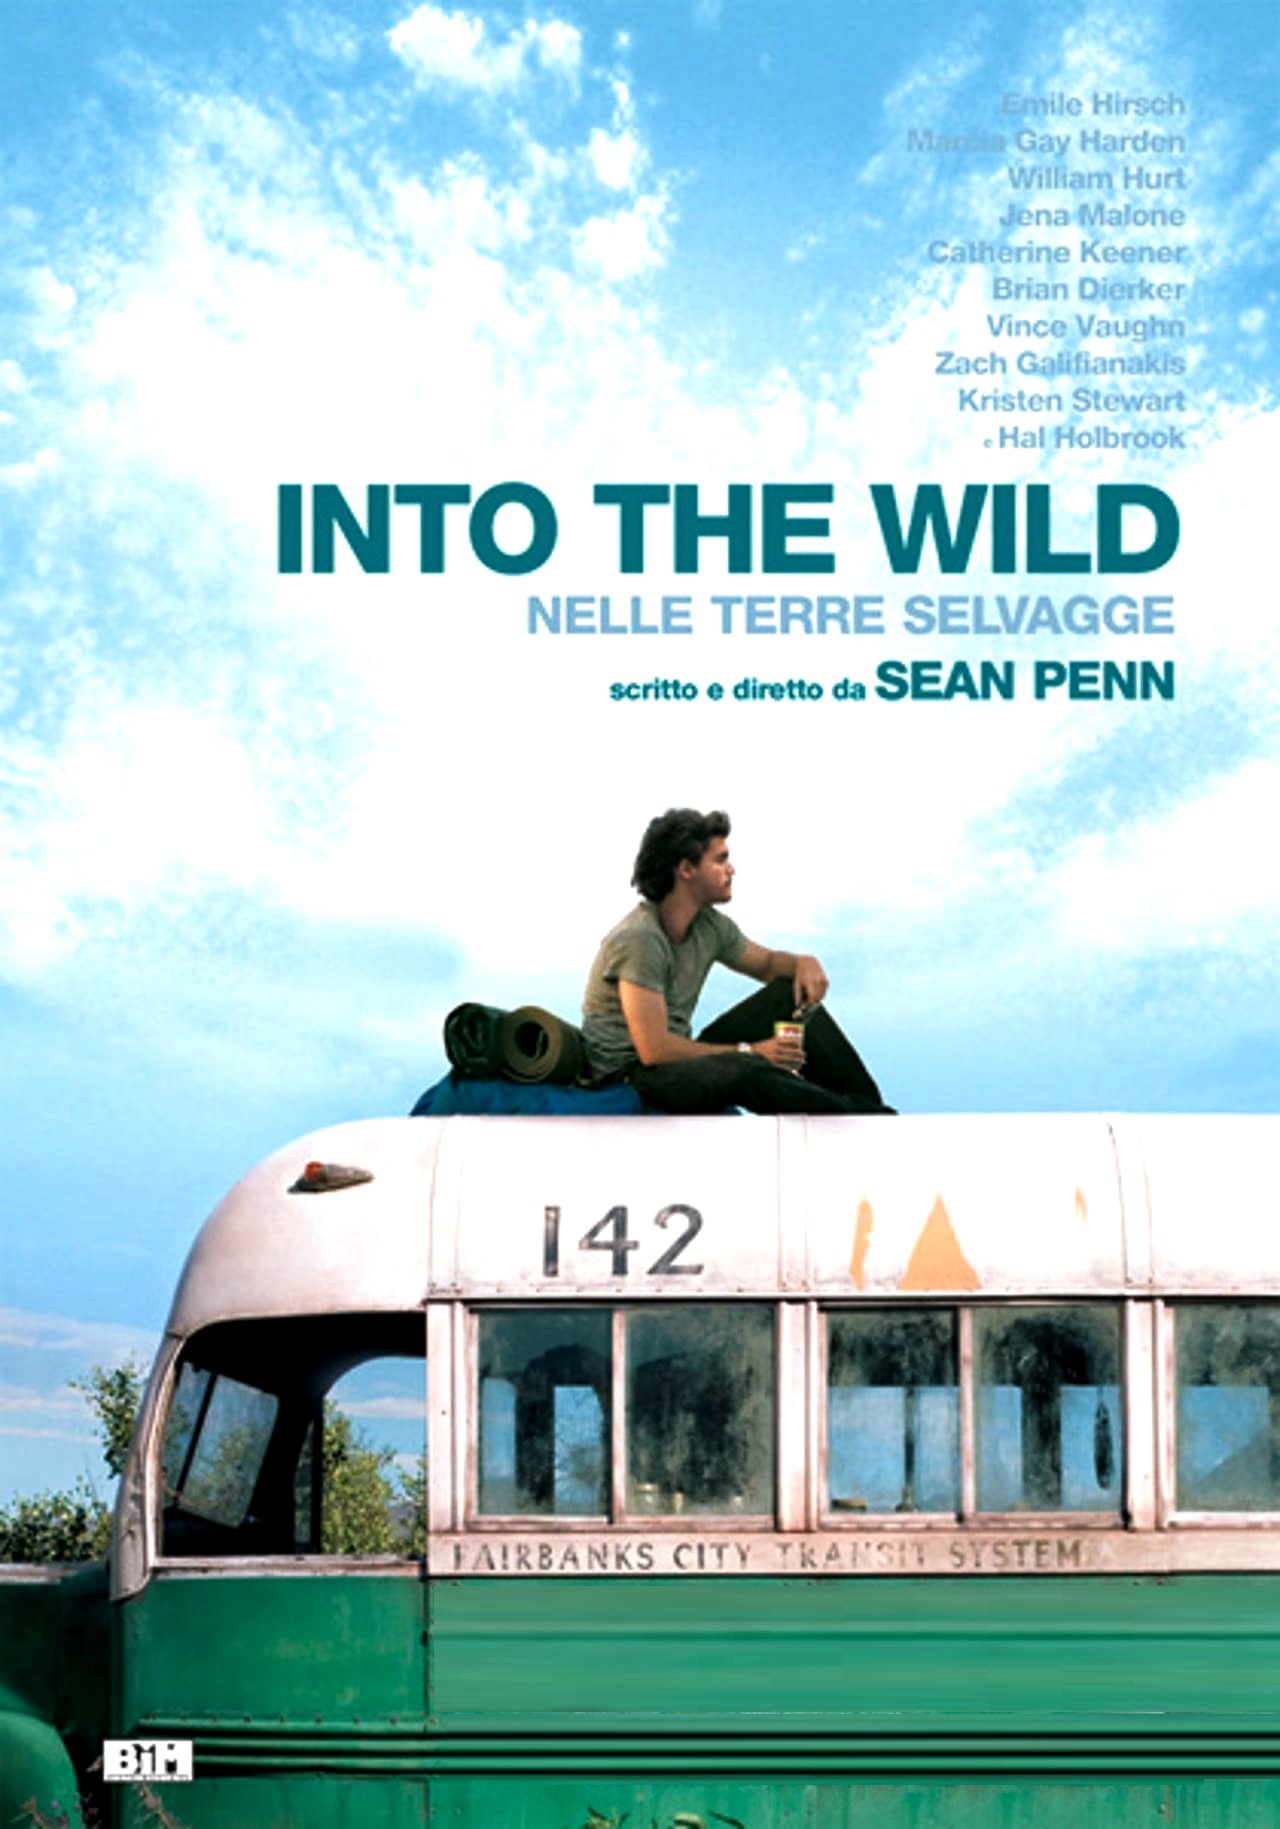 Into the Wild – Nelle terre selvagge [HD] (2007)